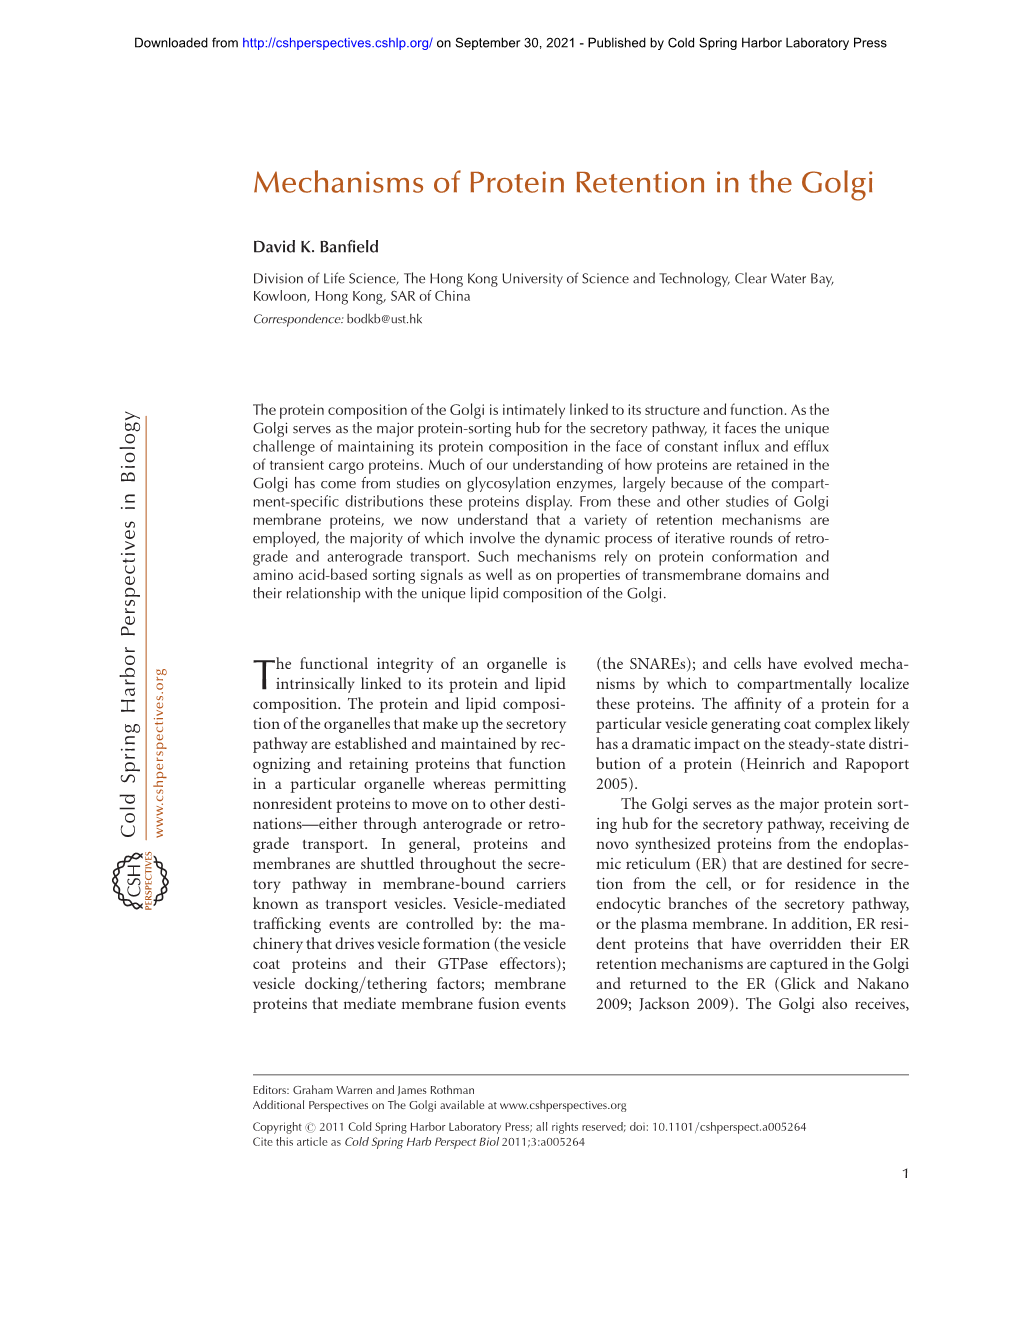 Mechanisms of Protein Retention in the Golgi